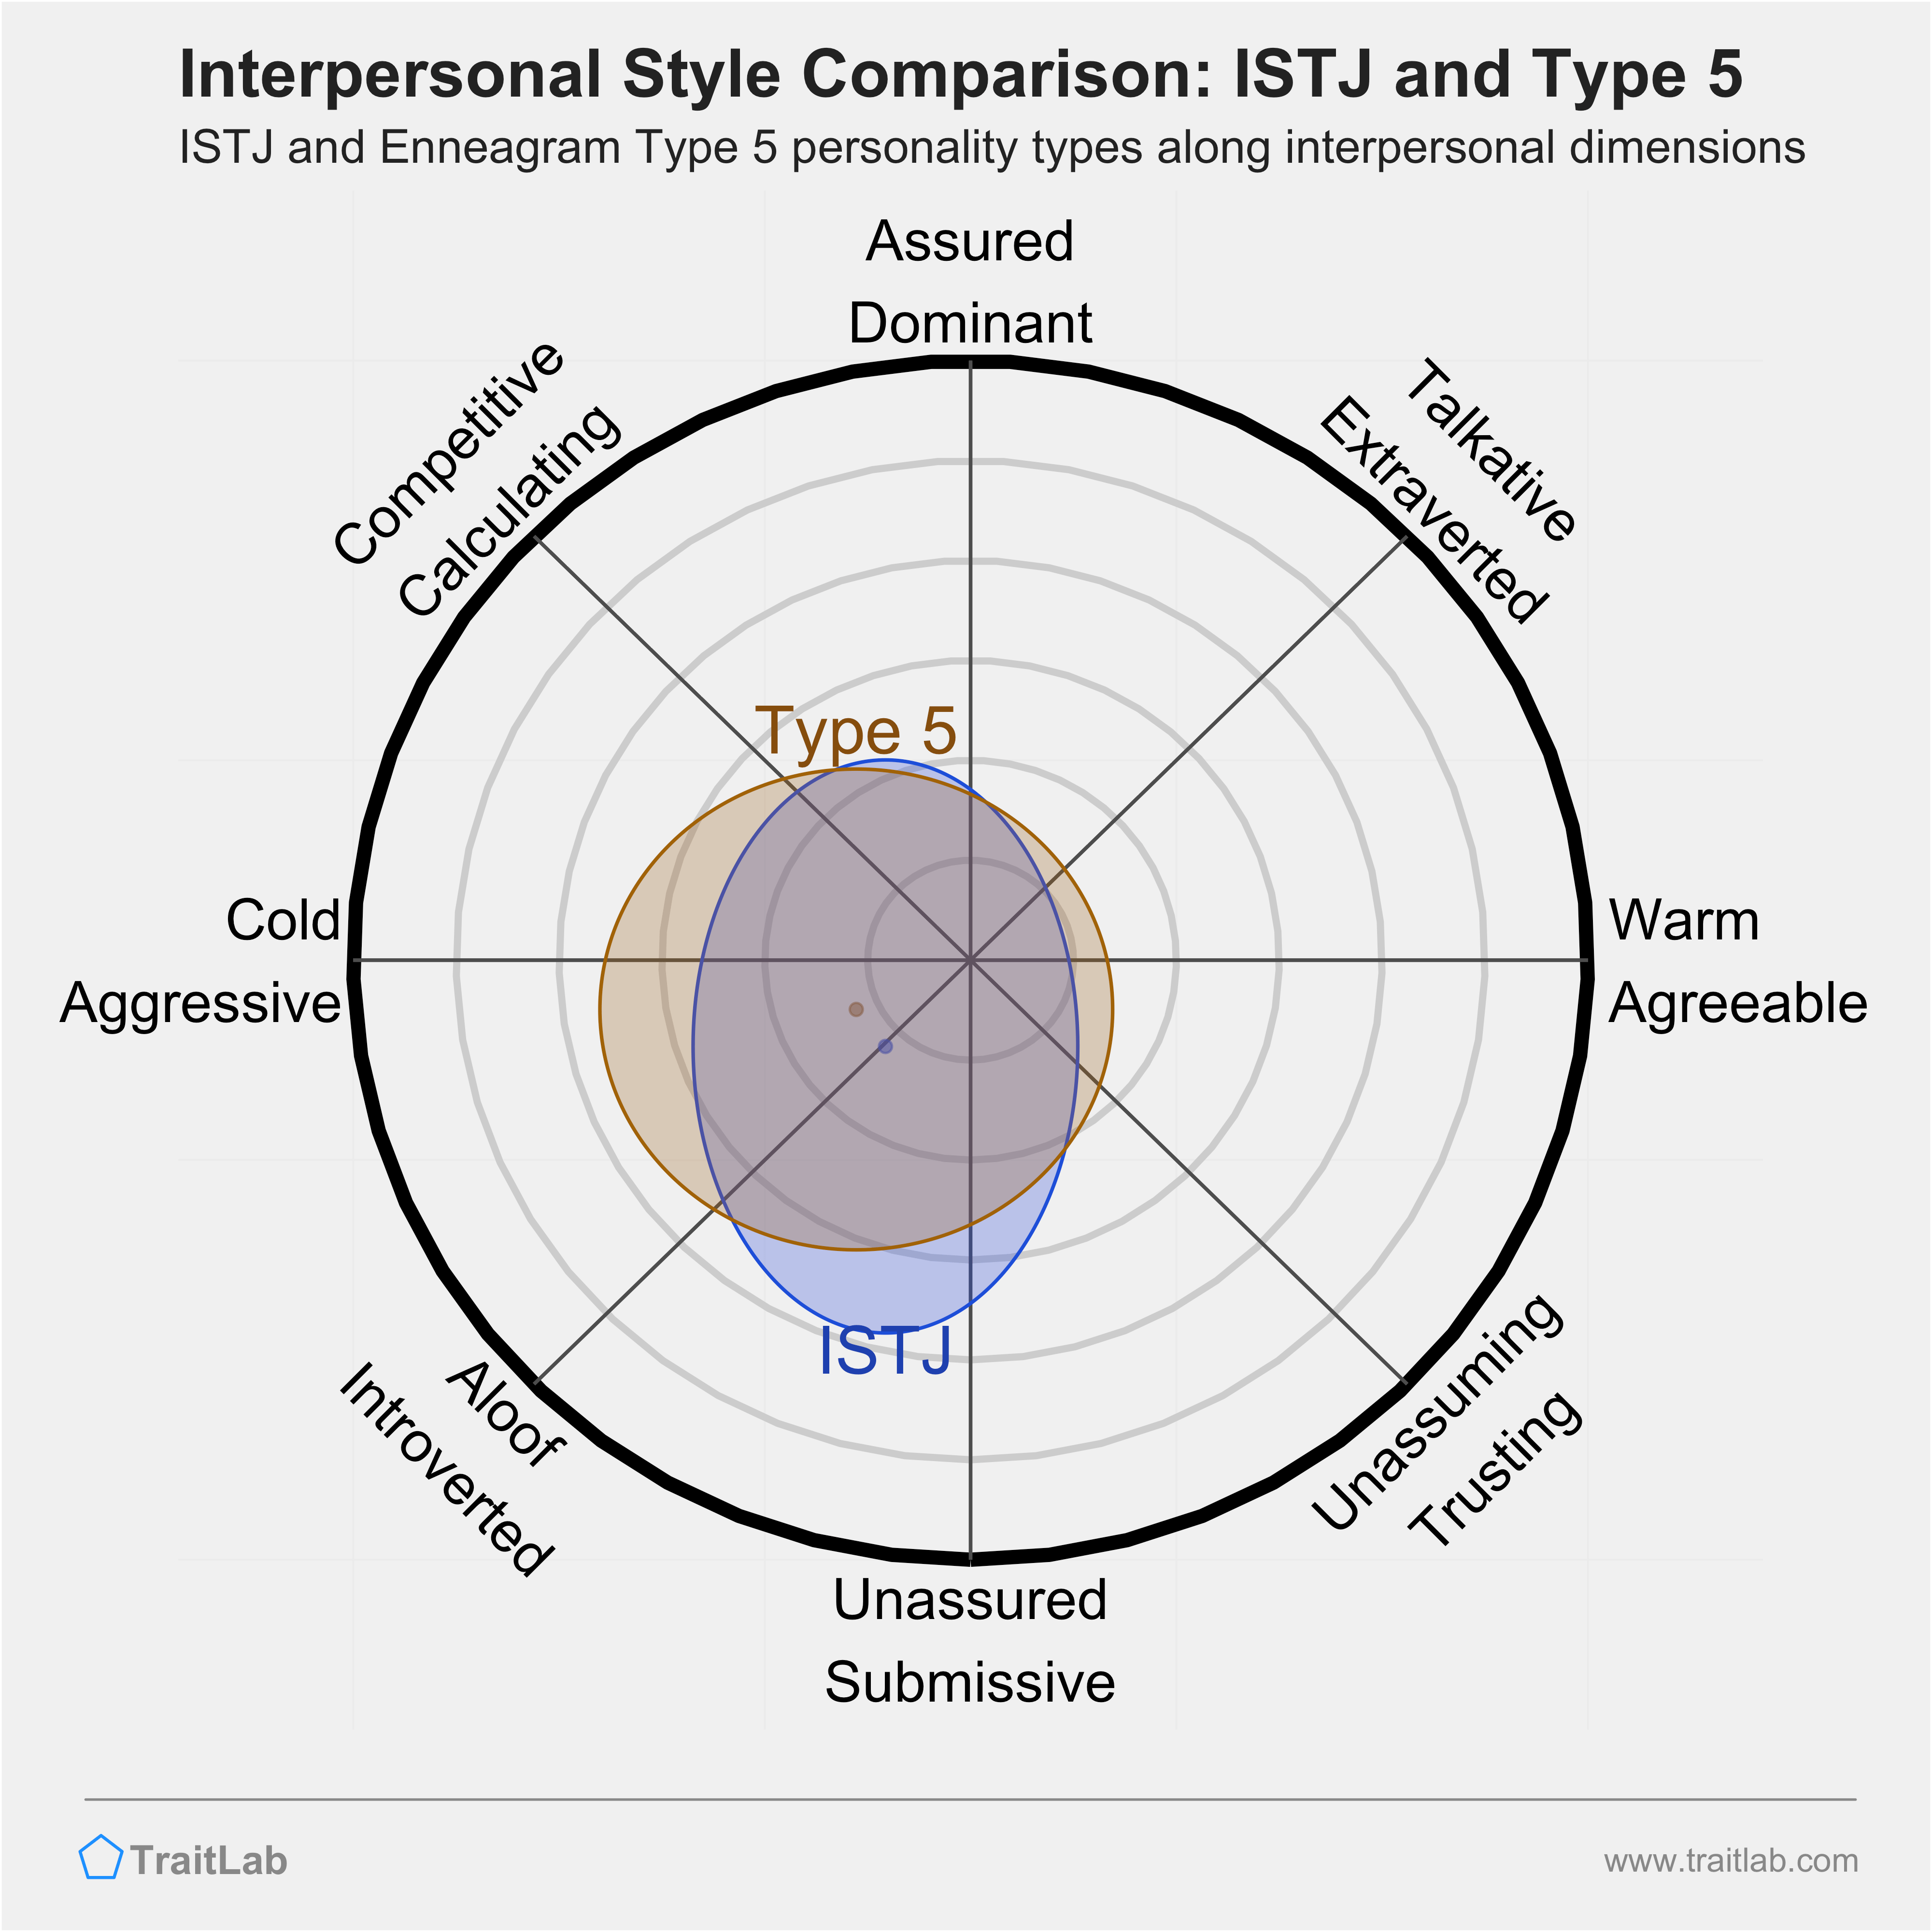 Enneagram ISTJ and Type 5 comparison across interpersonal dimensions